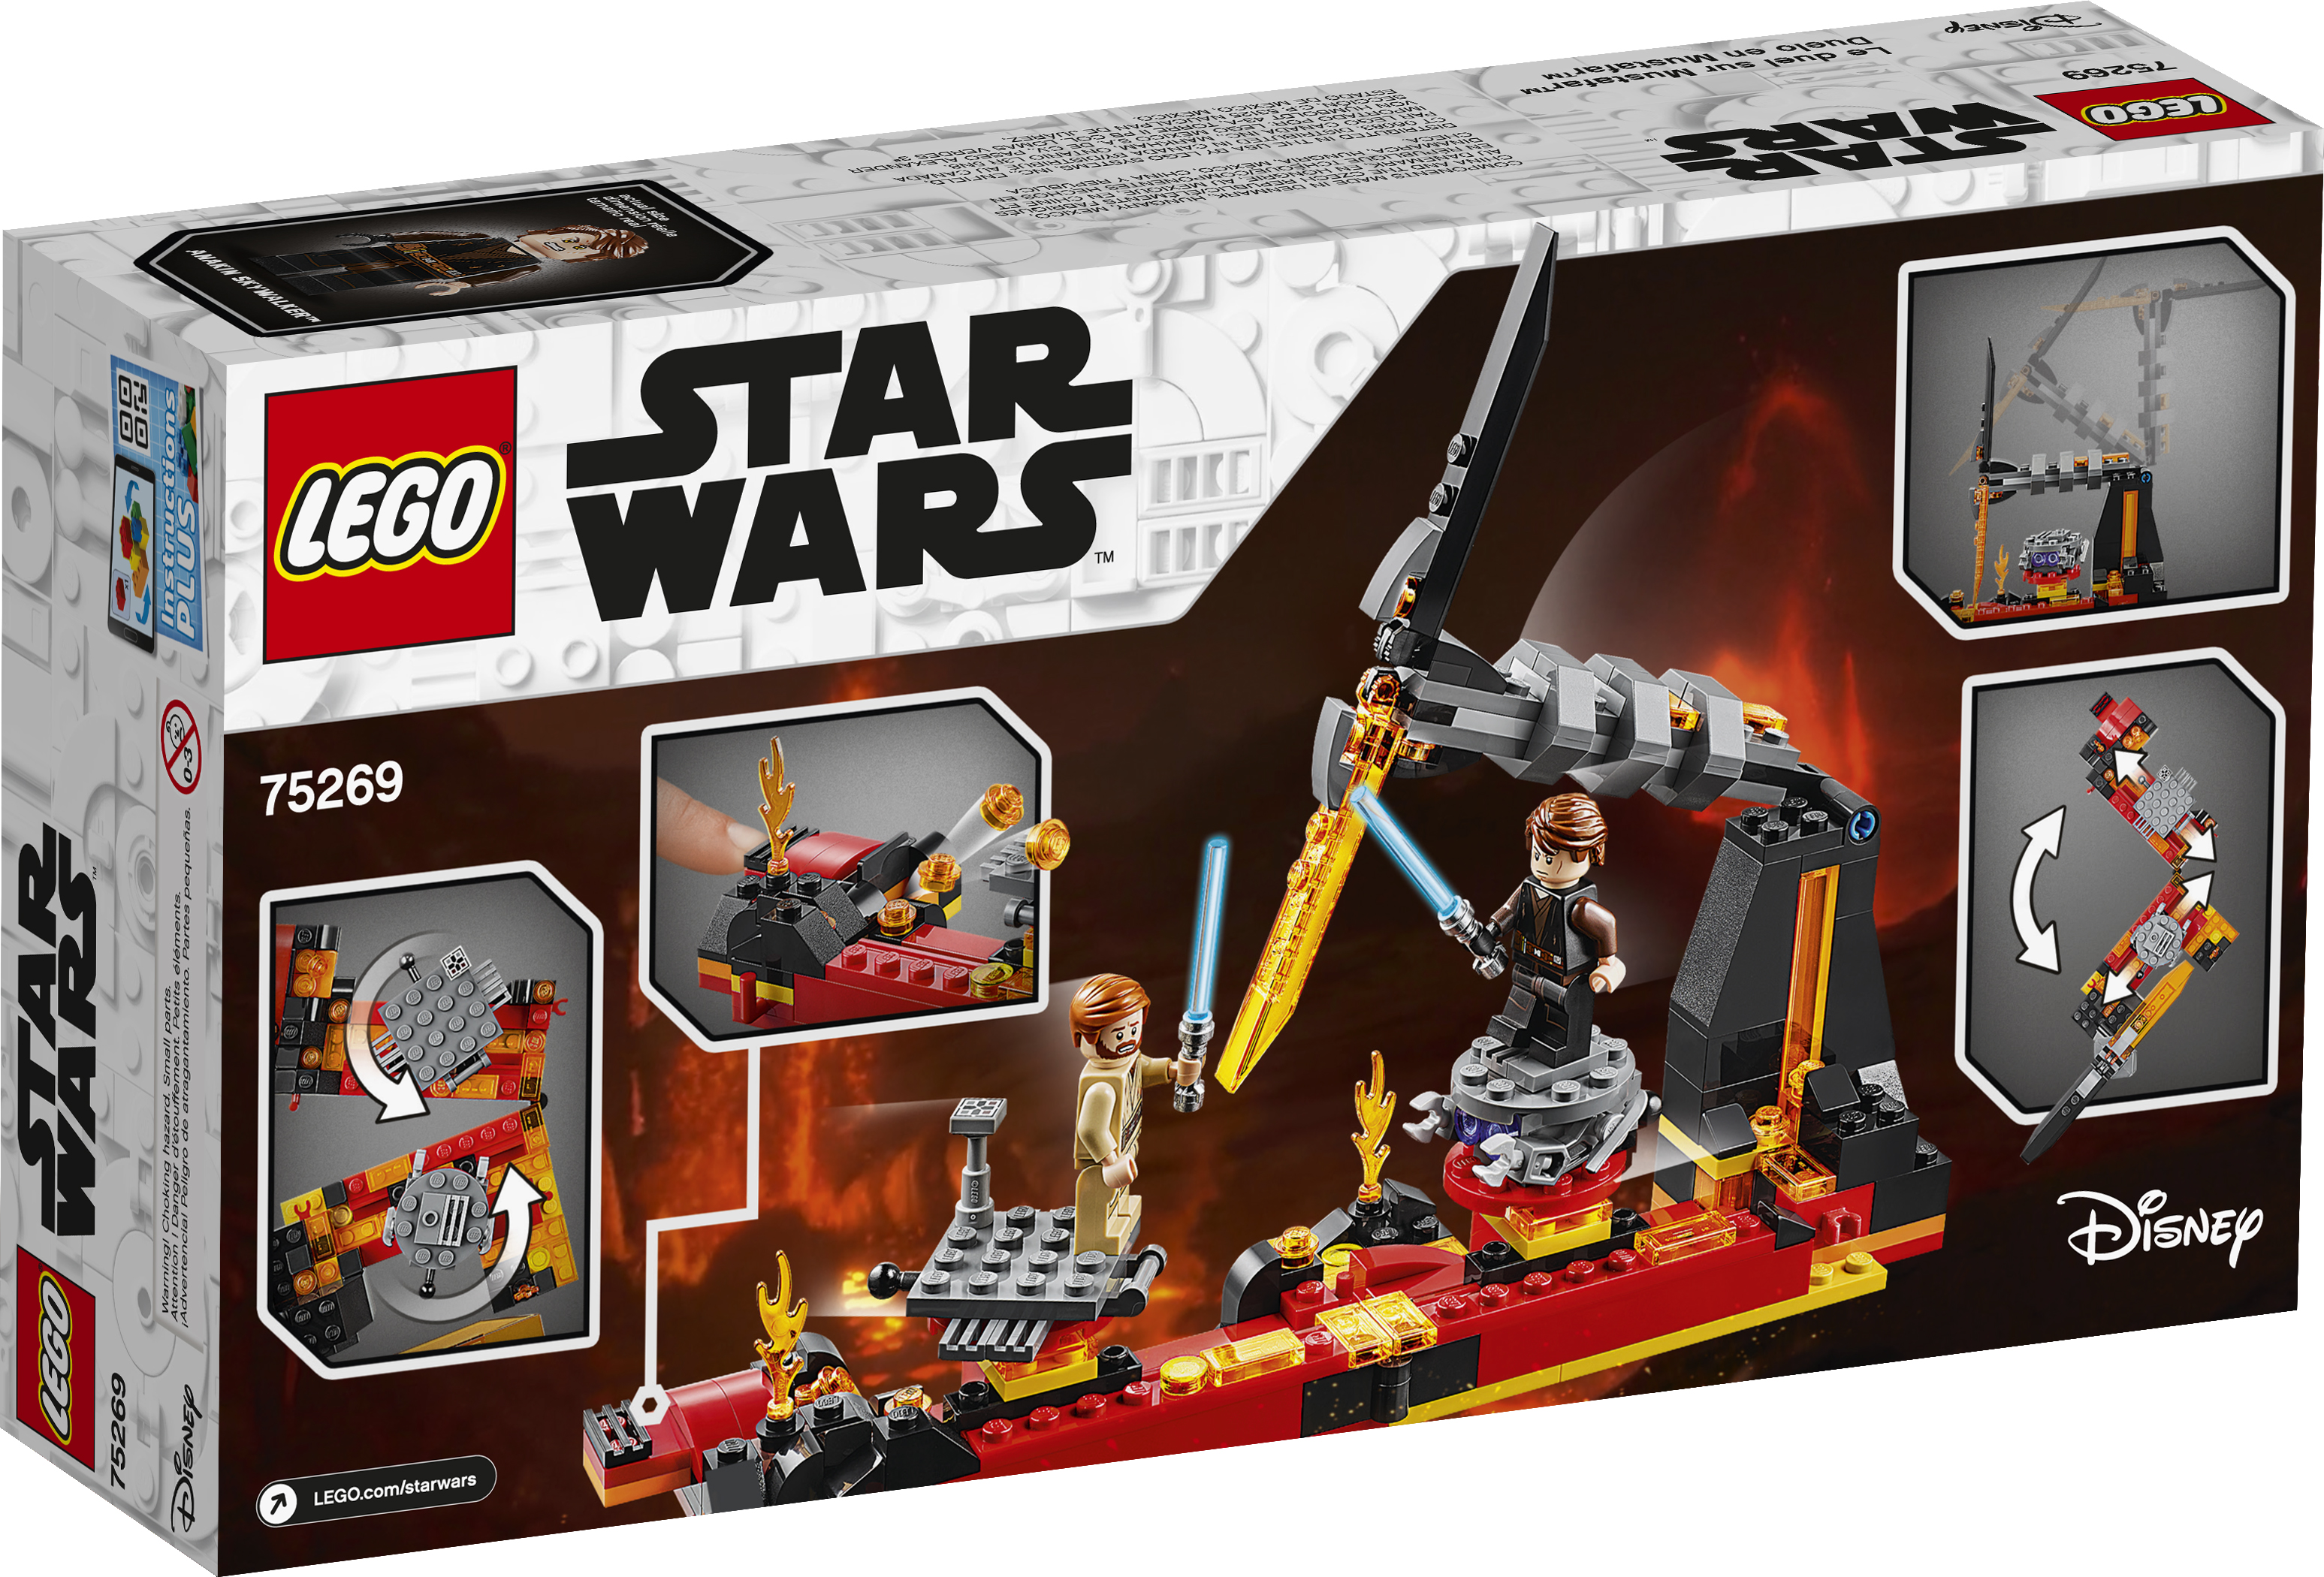 ROTS Anakin Skywalker vs. Obi-Wan Lego Set 2